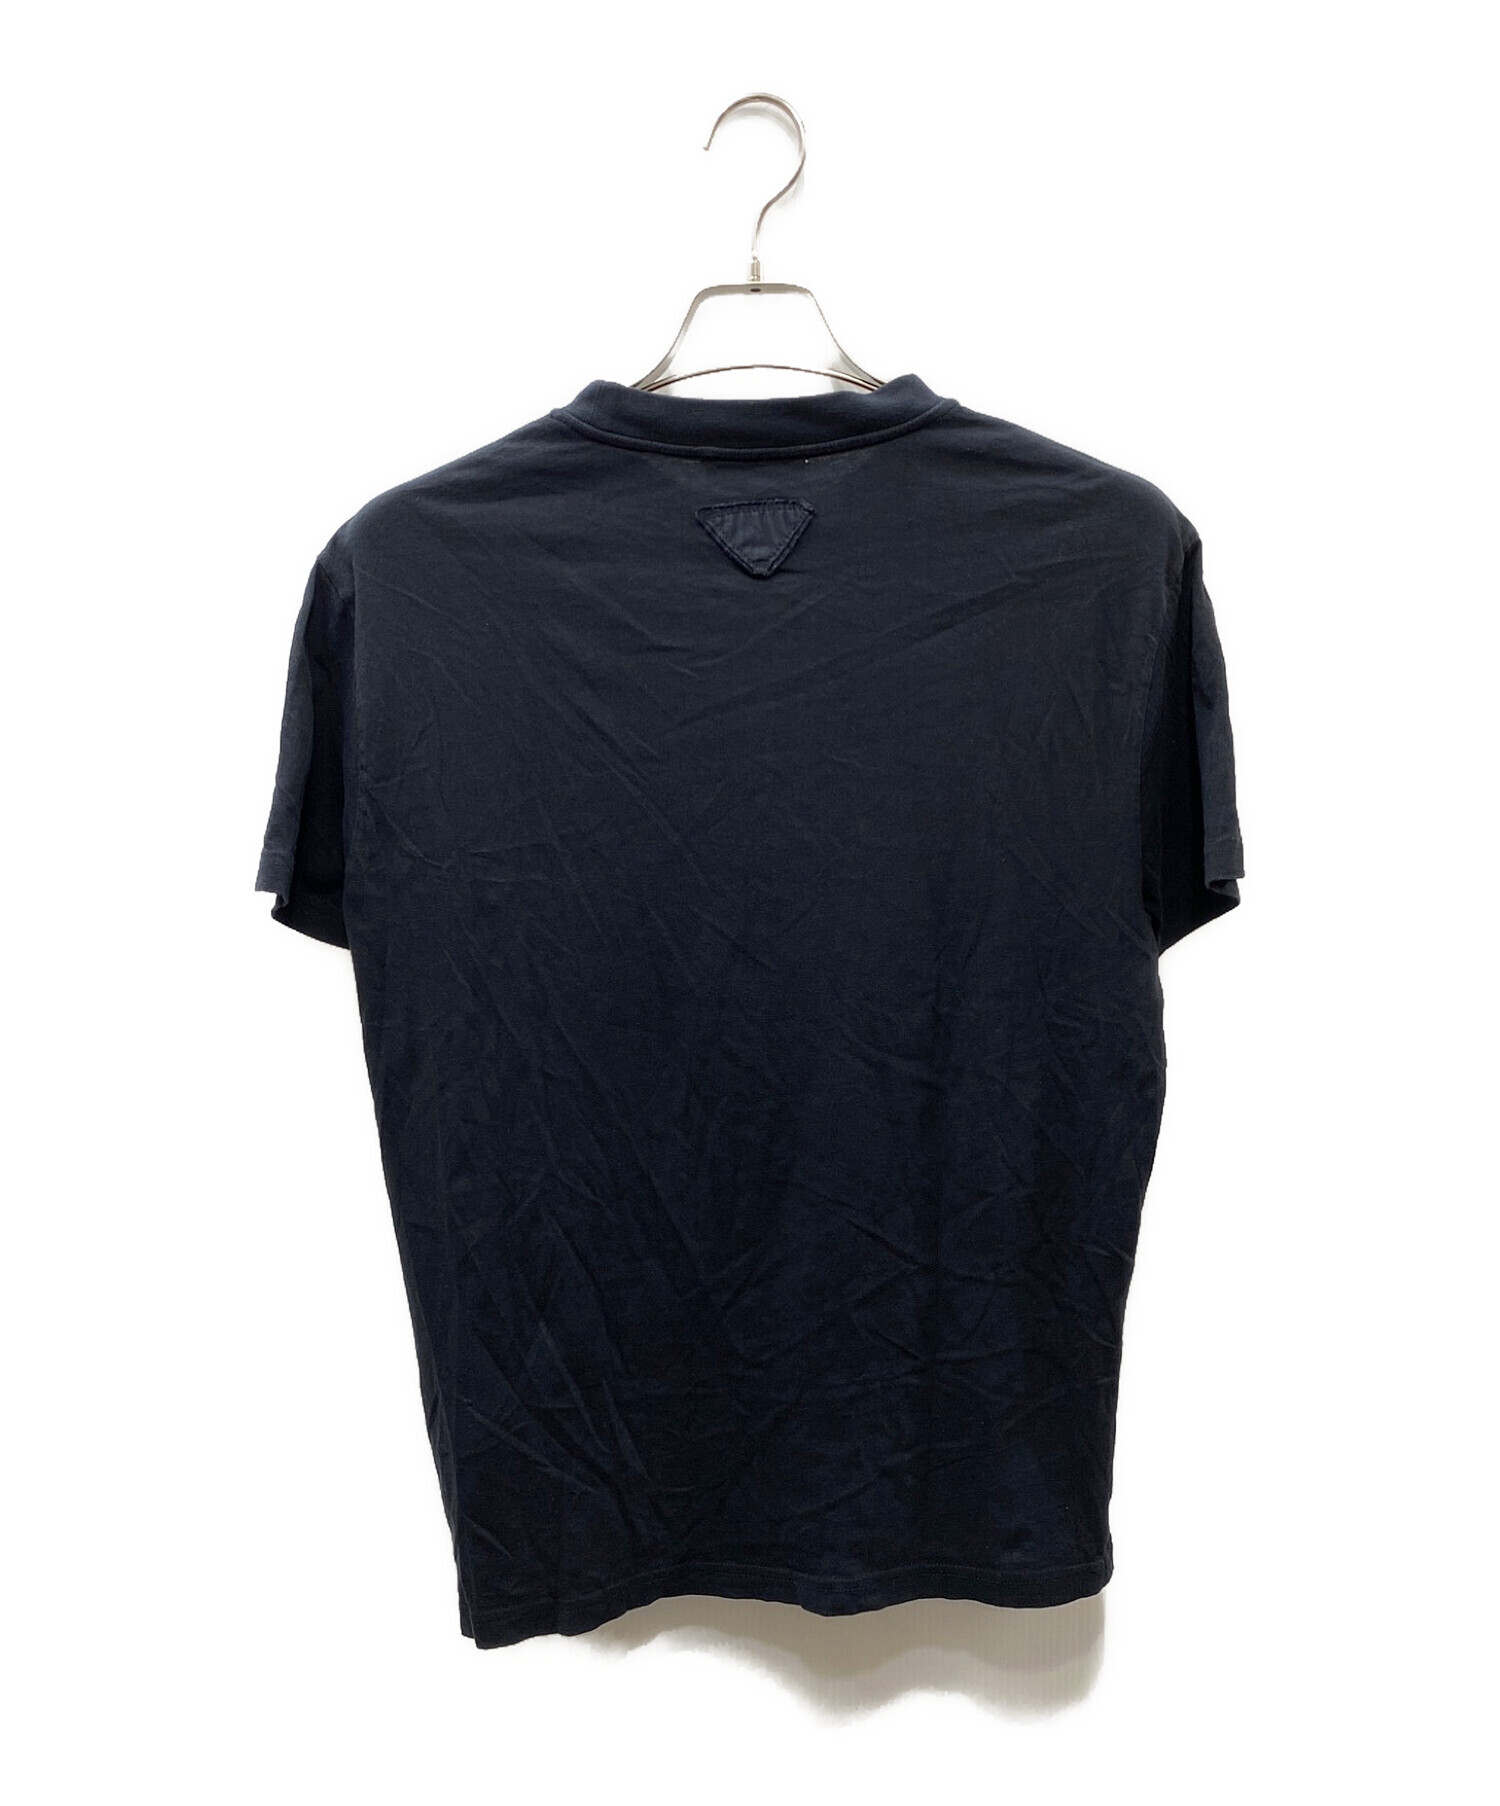 PRADA (プラダ) 三角プレートパッチ 半袖Tシャツ ブラック サイズ:L